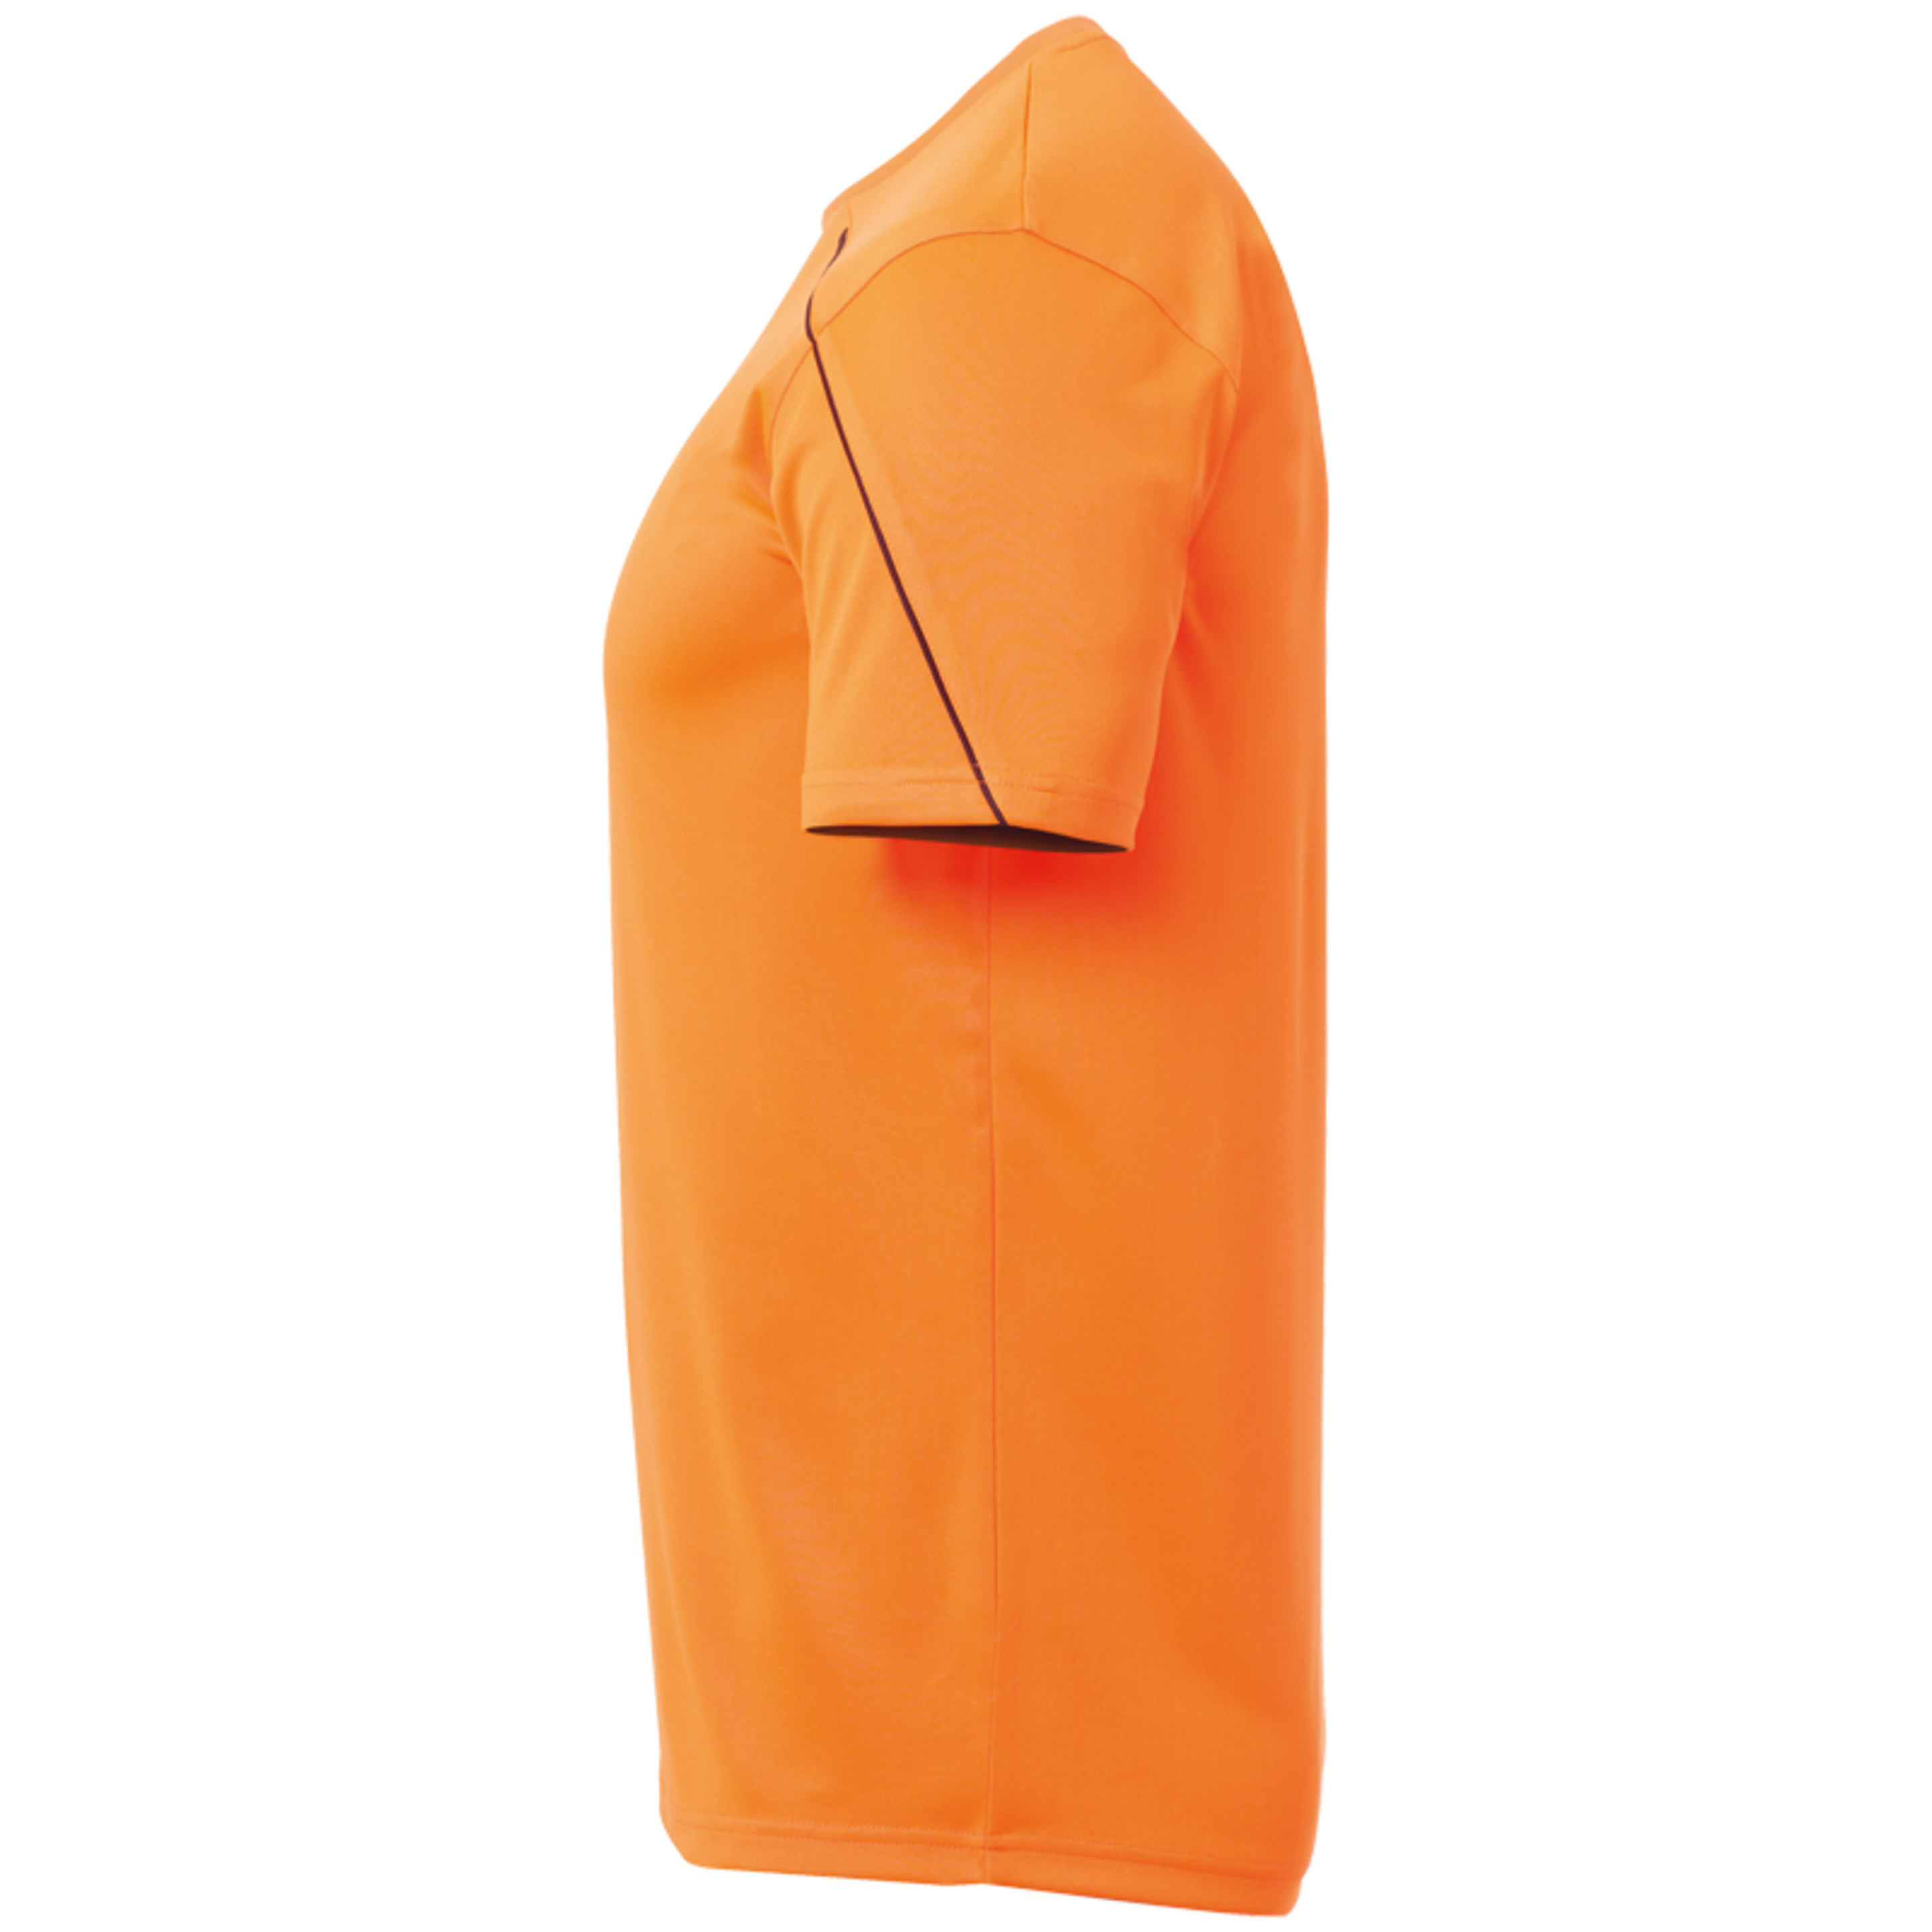 Stream 22 Shirt Shortsleeved Naranja Uhlsport - naranja - Stream 22 Shirt Shortsleeved Naranja Uhlsport  MKP